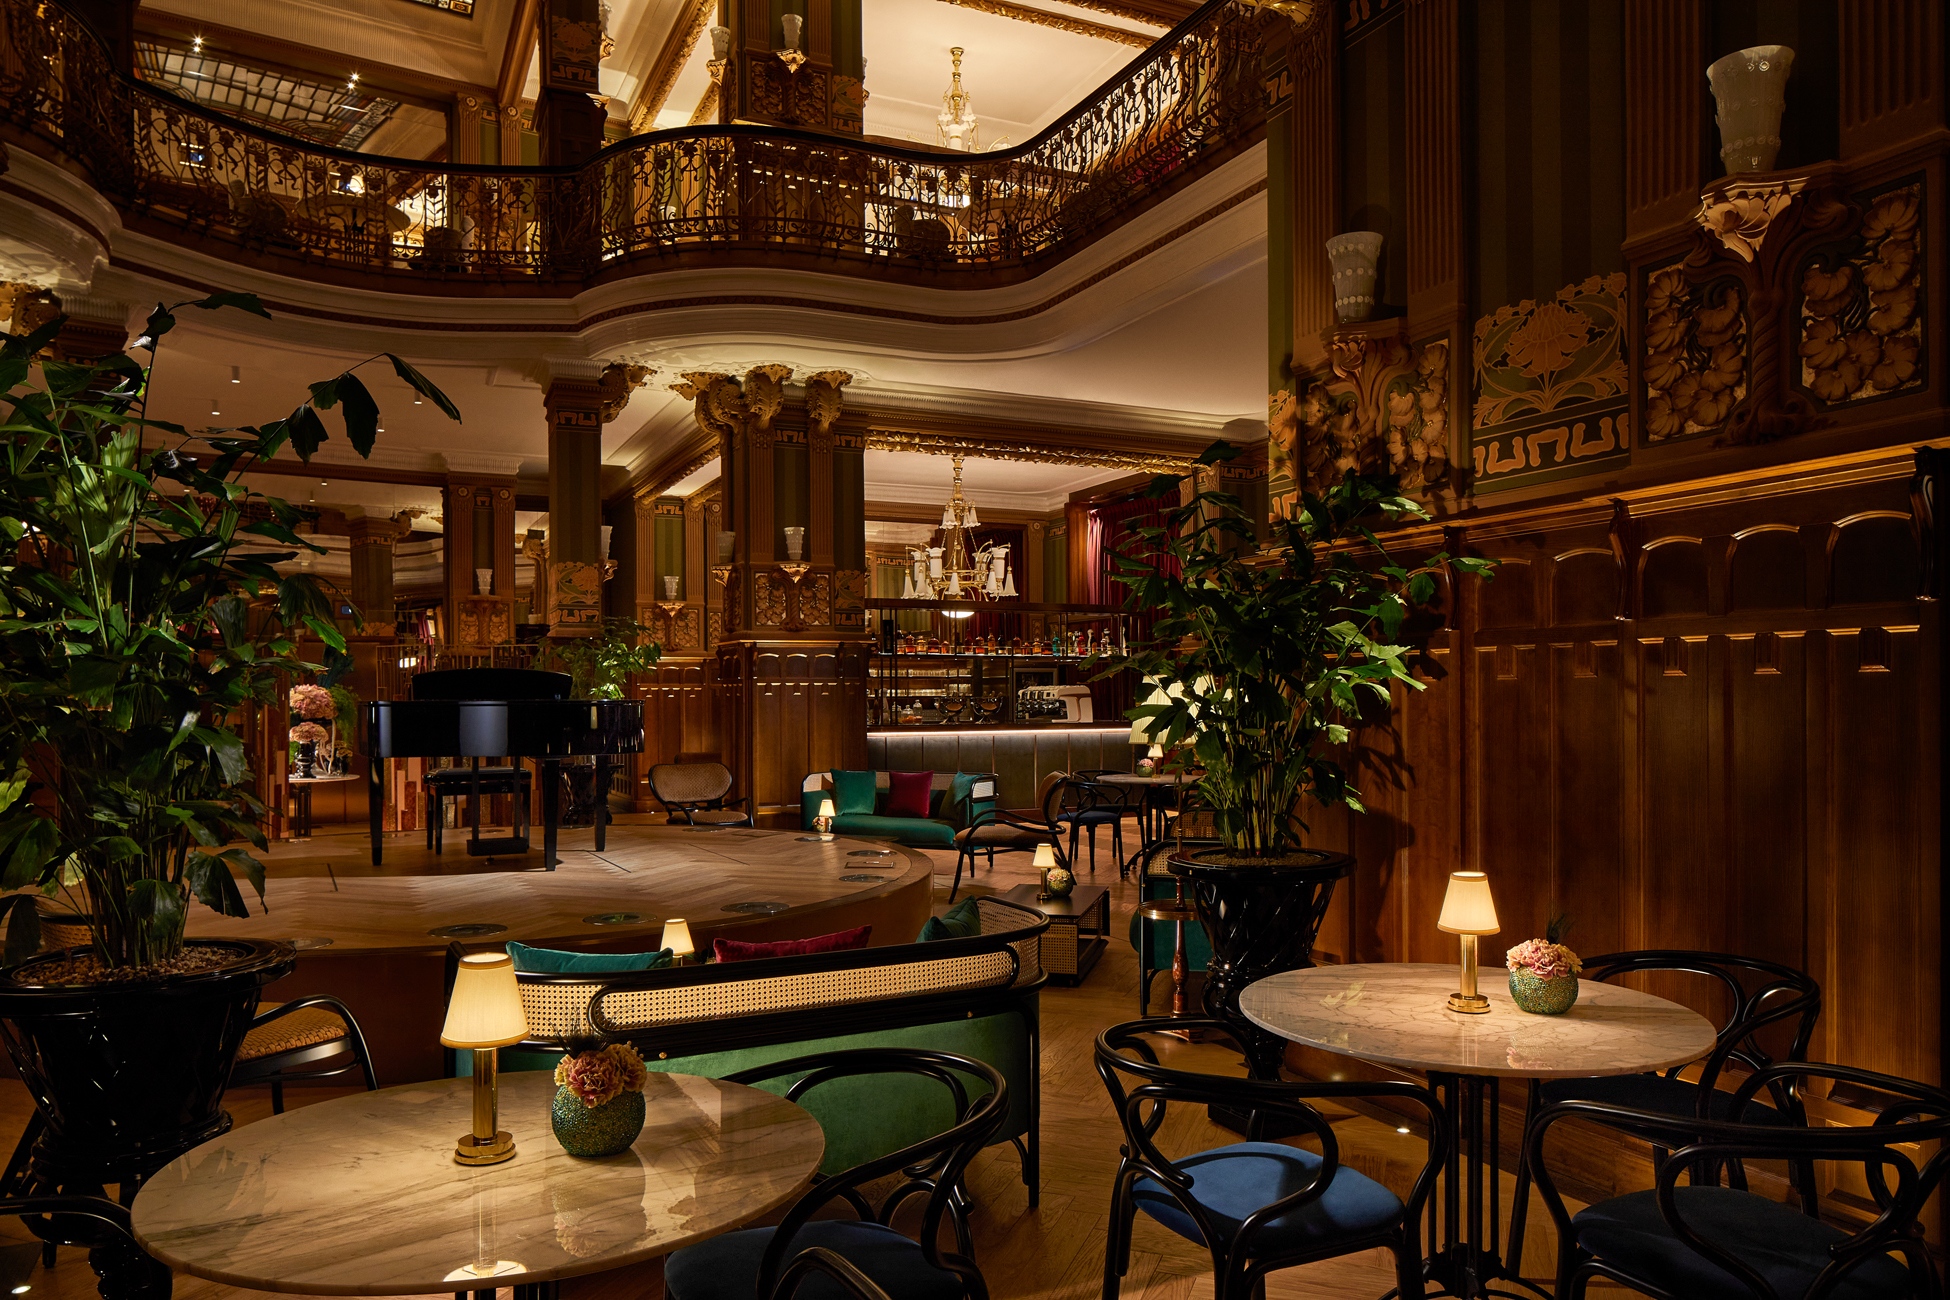 Matild Palace Luxurios Hotel Budapest Hungría Café y Cabaret Coffeehouse